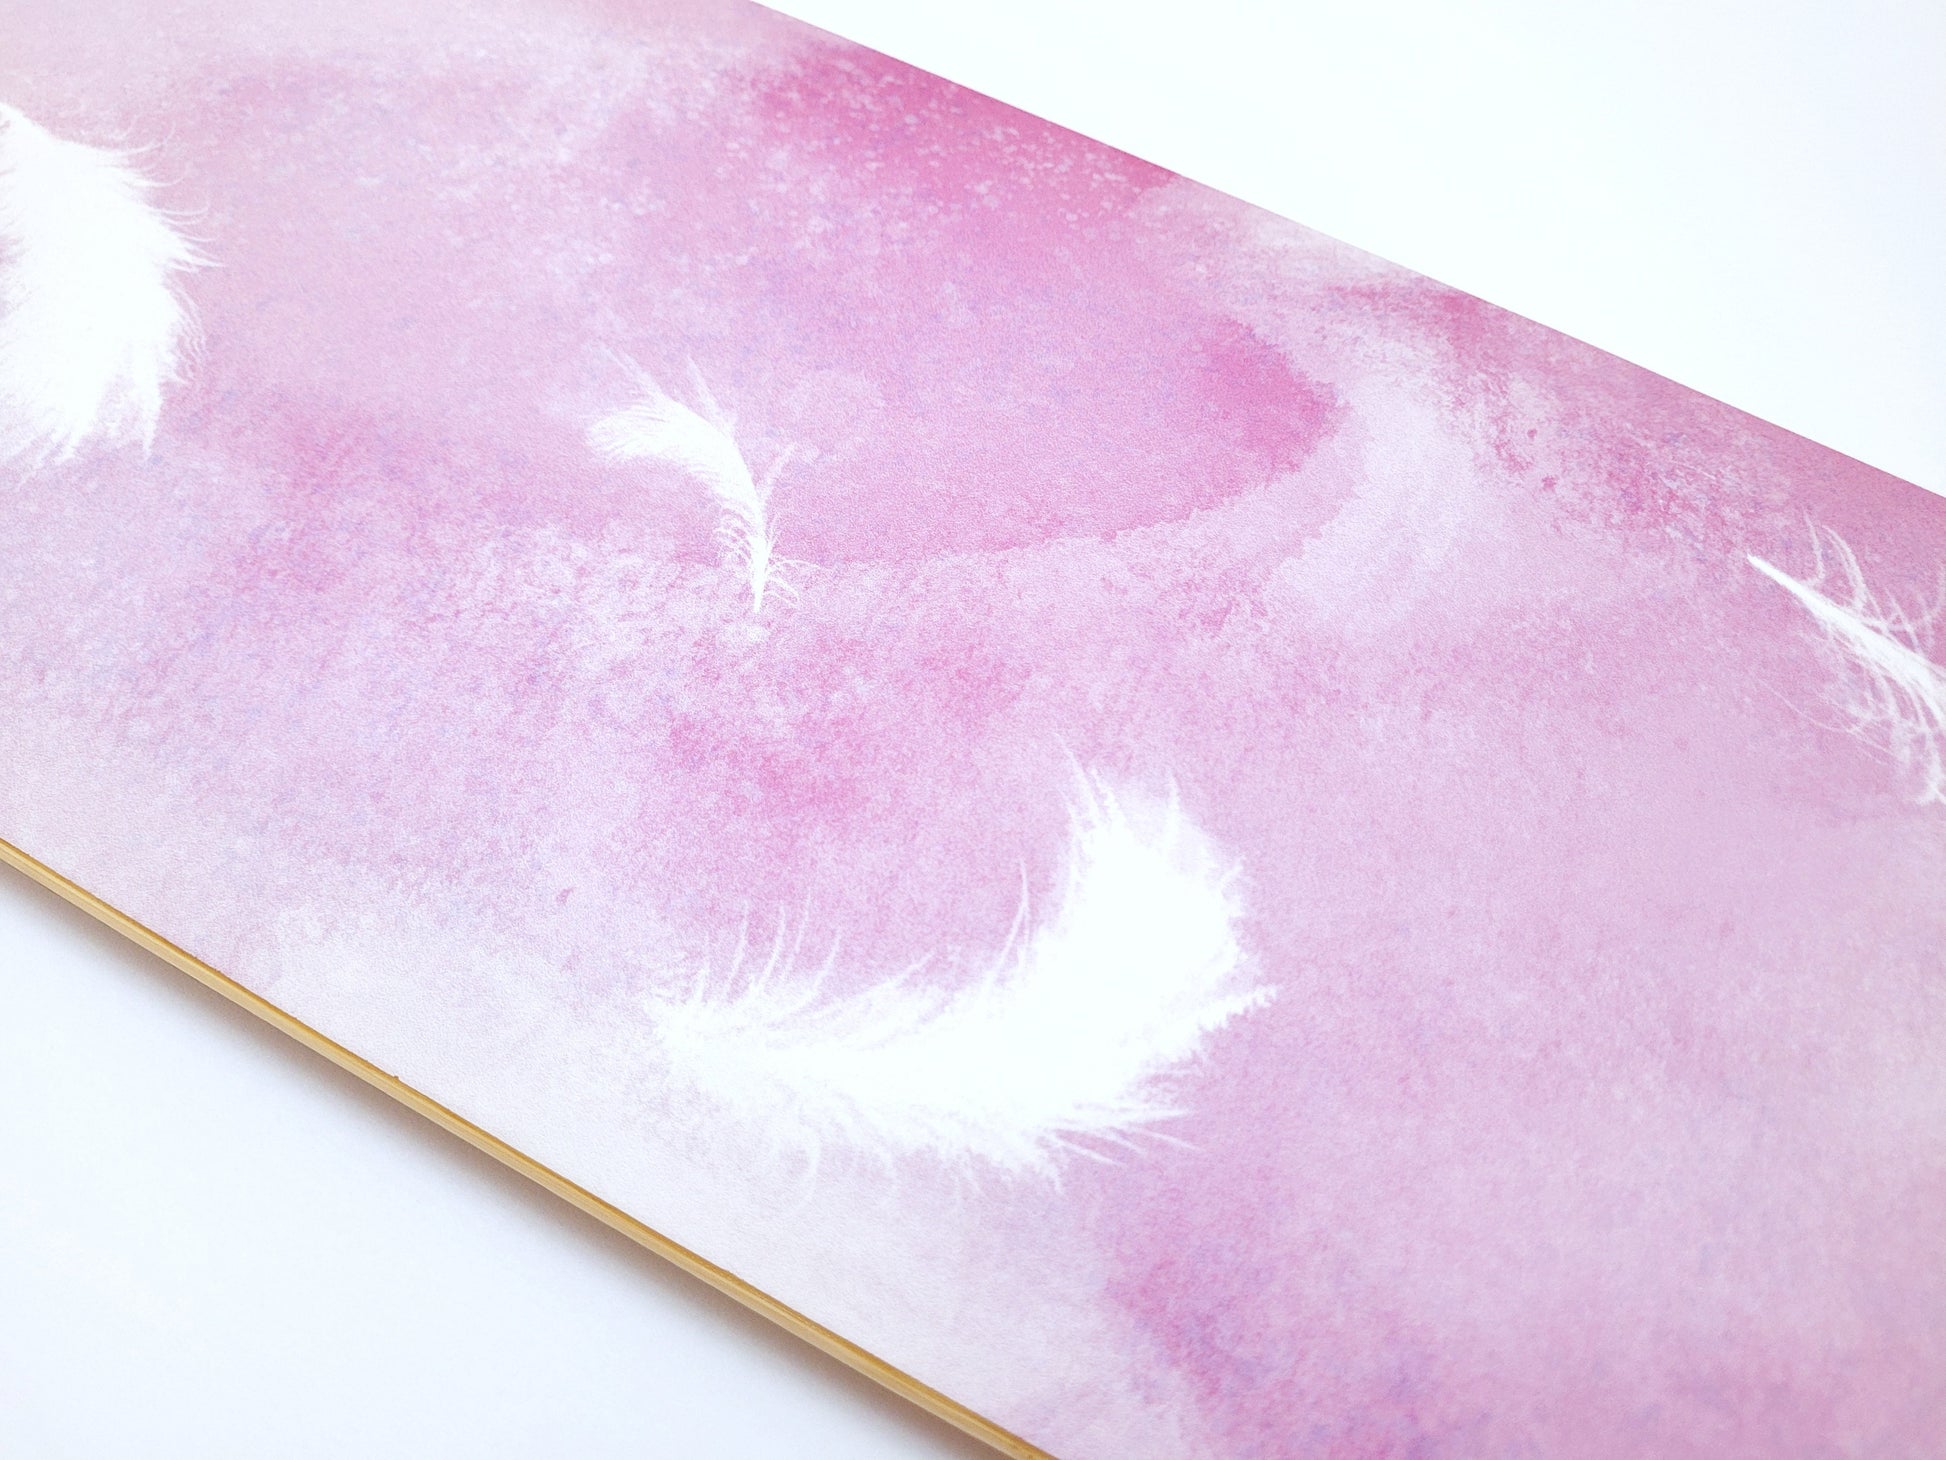 Rebirth Pink Feather longboard - SkatebruhSG